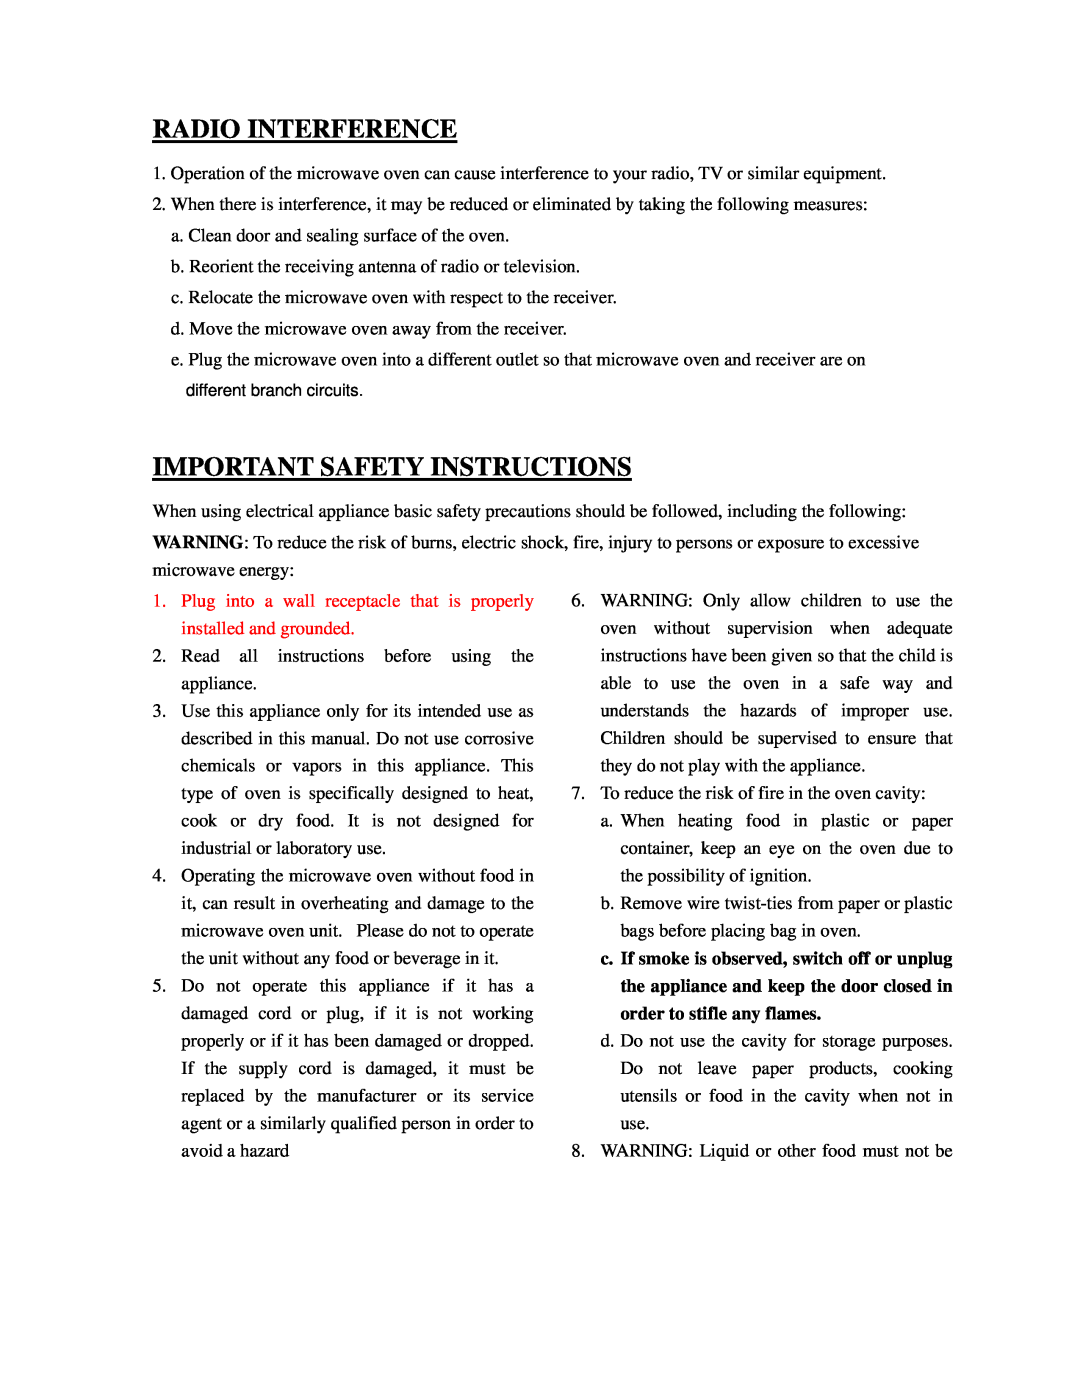 Sanyo EM-S3579V instruction manual Radio Interference, Important Safety Instructions 